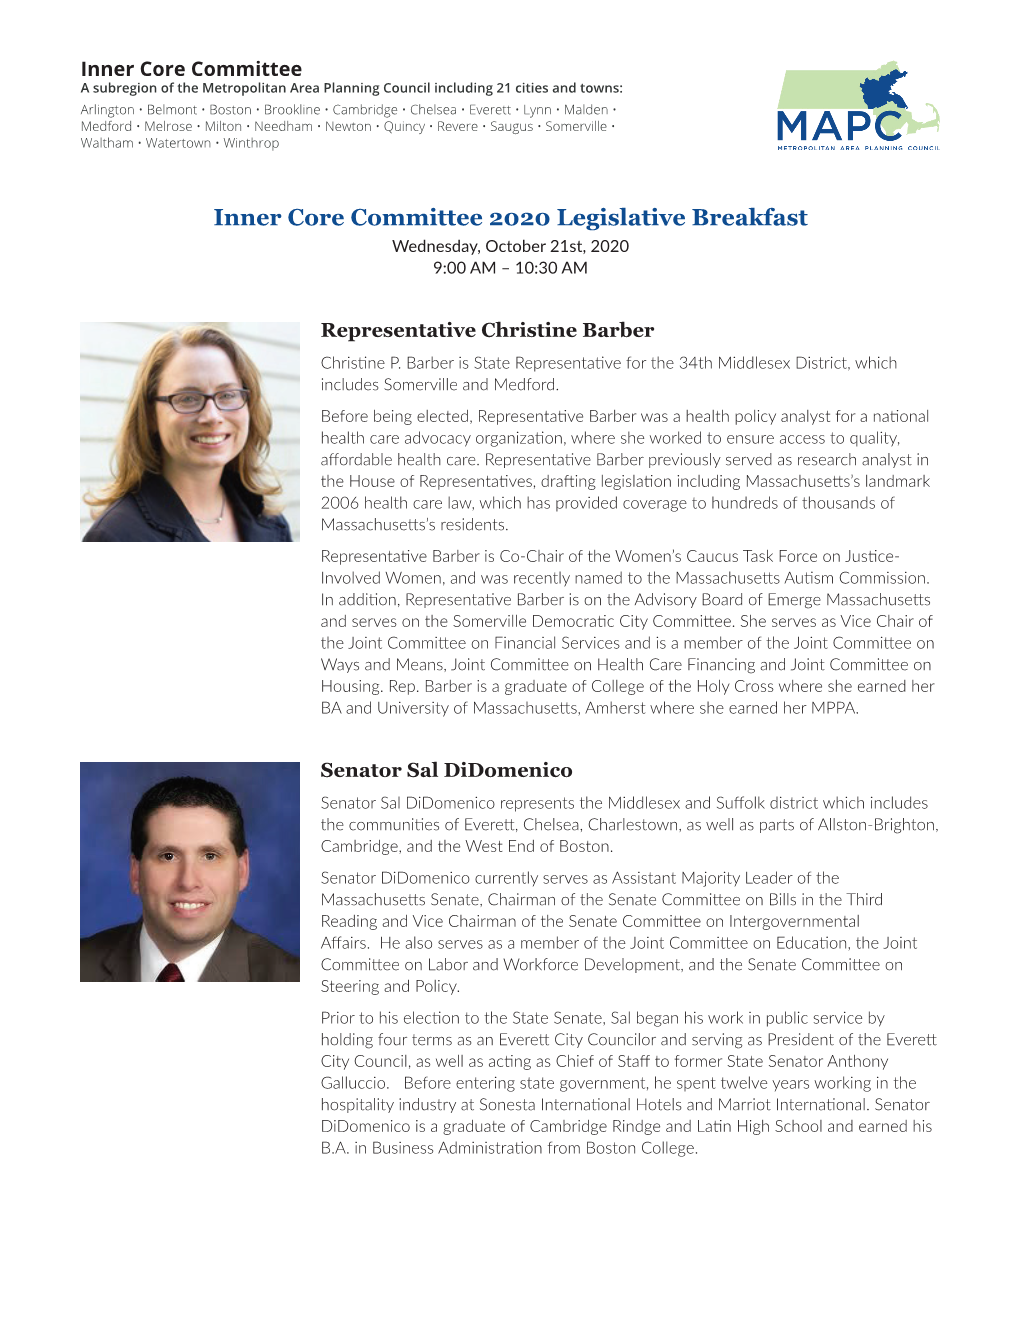 Legislative Breakfast Speakers